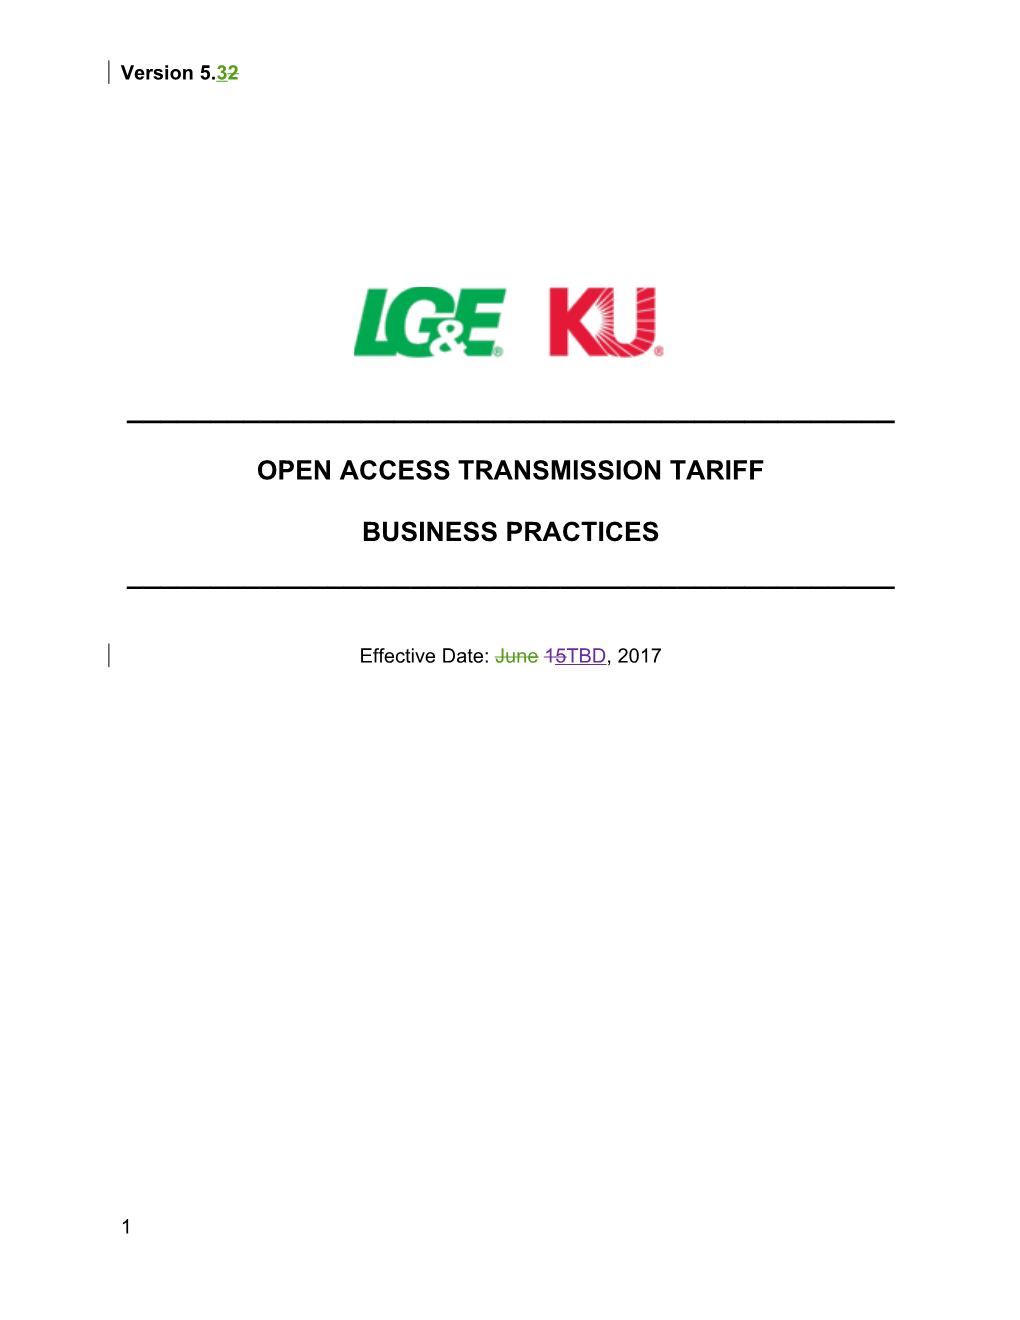 Open Access Transmission Tariff